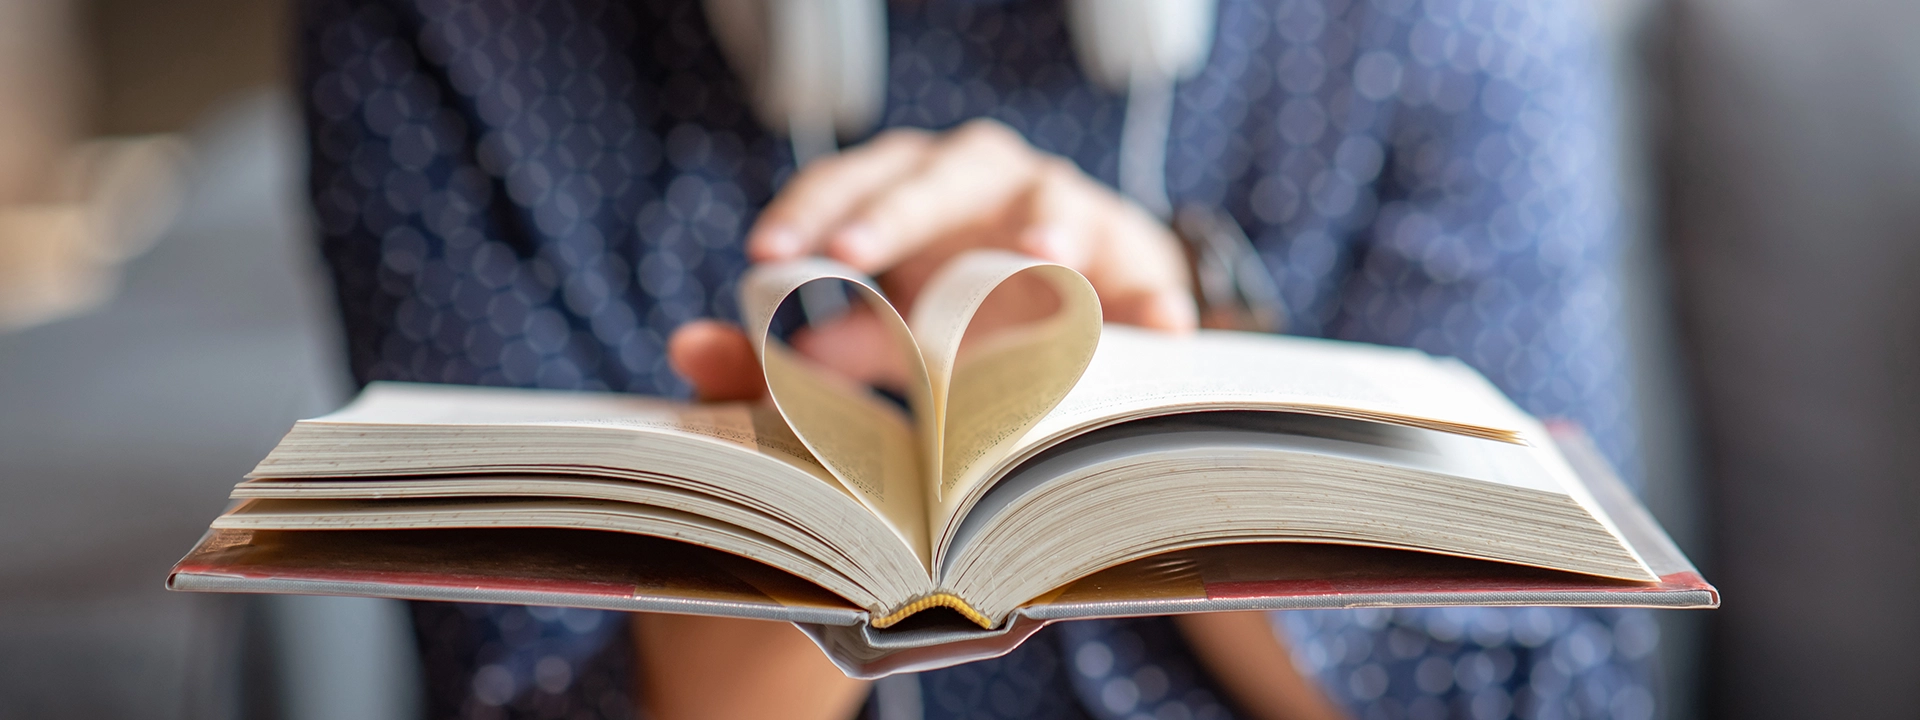 7 Tips to Help You Balance Graduate Studies and Romance